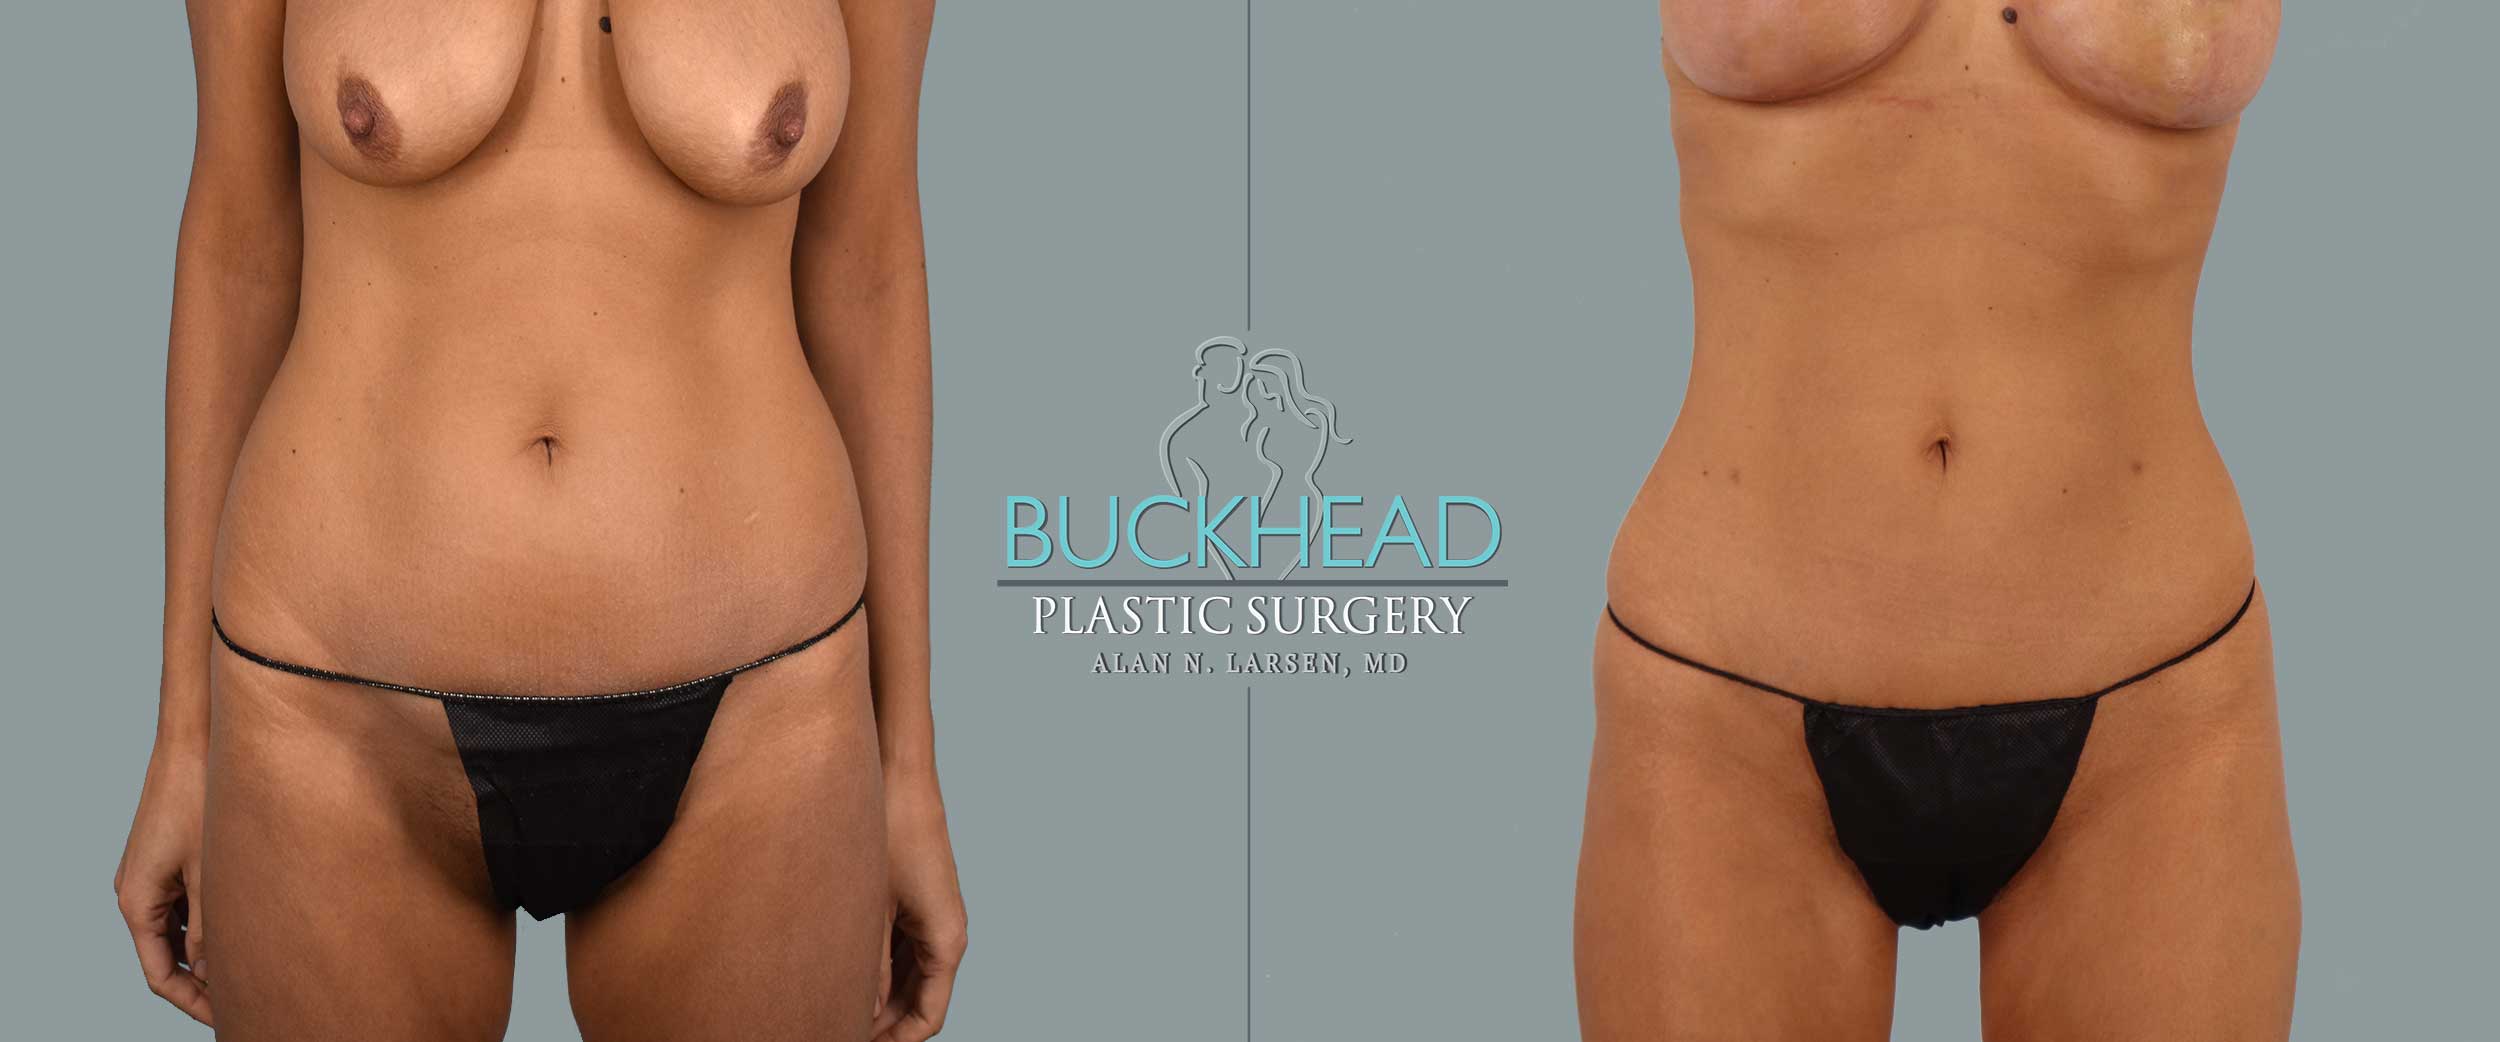 Alan N Larsen, MD, Double Board Plastic Surgeon at Buckhead Plastic Surgery